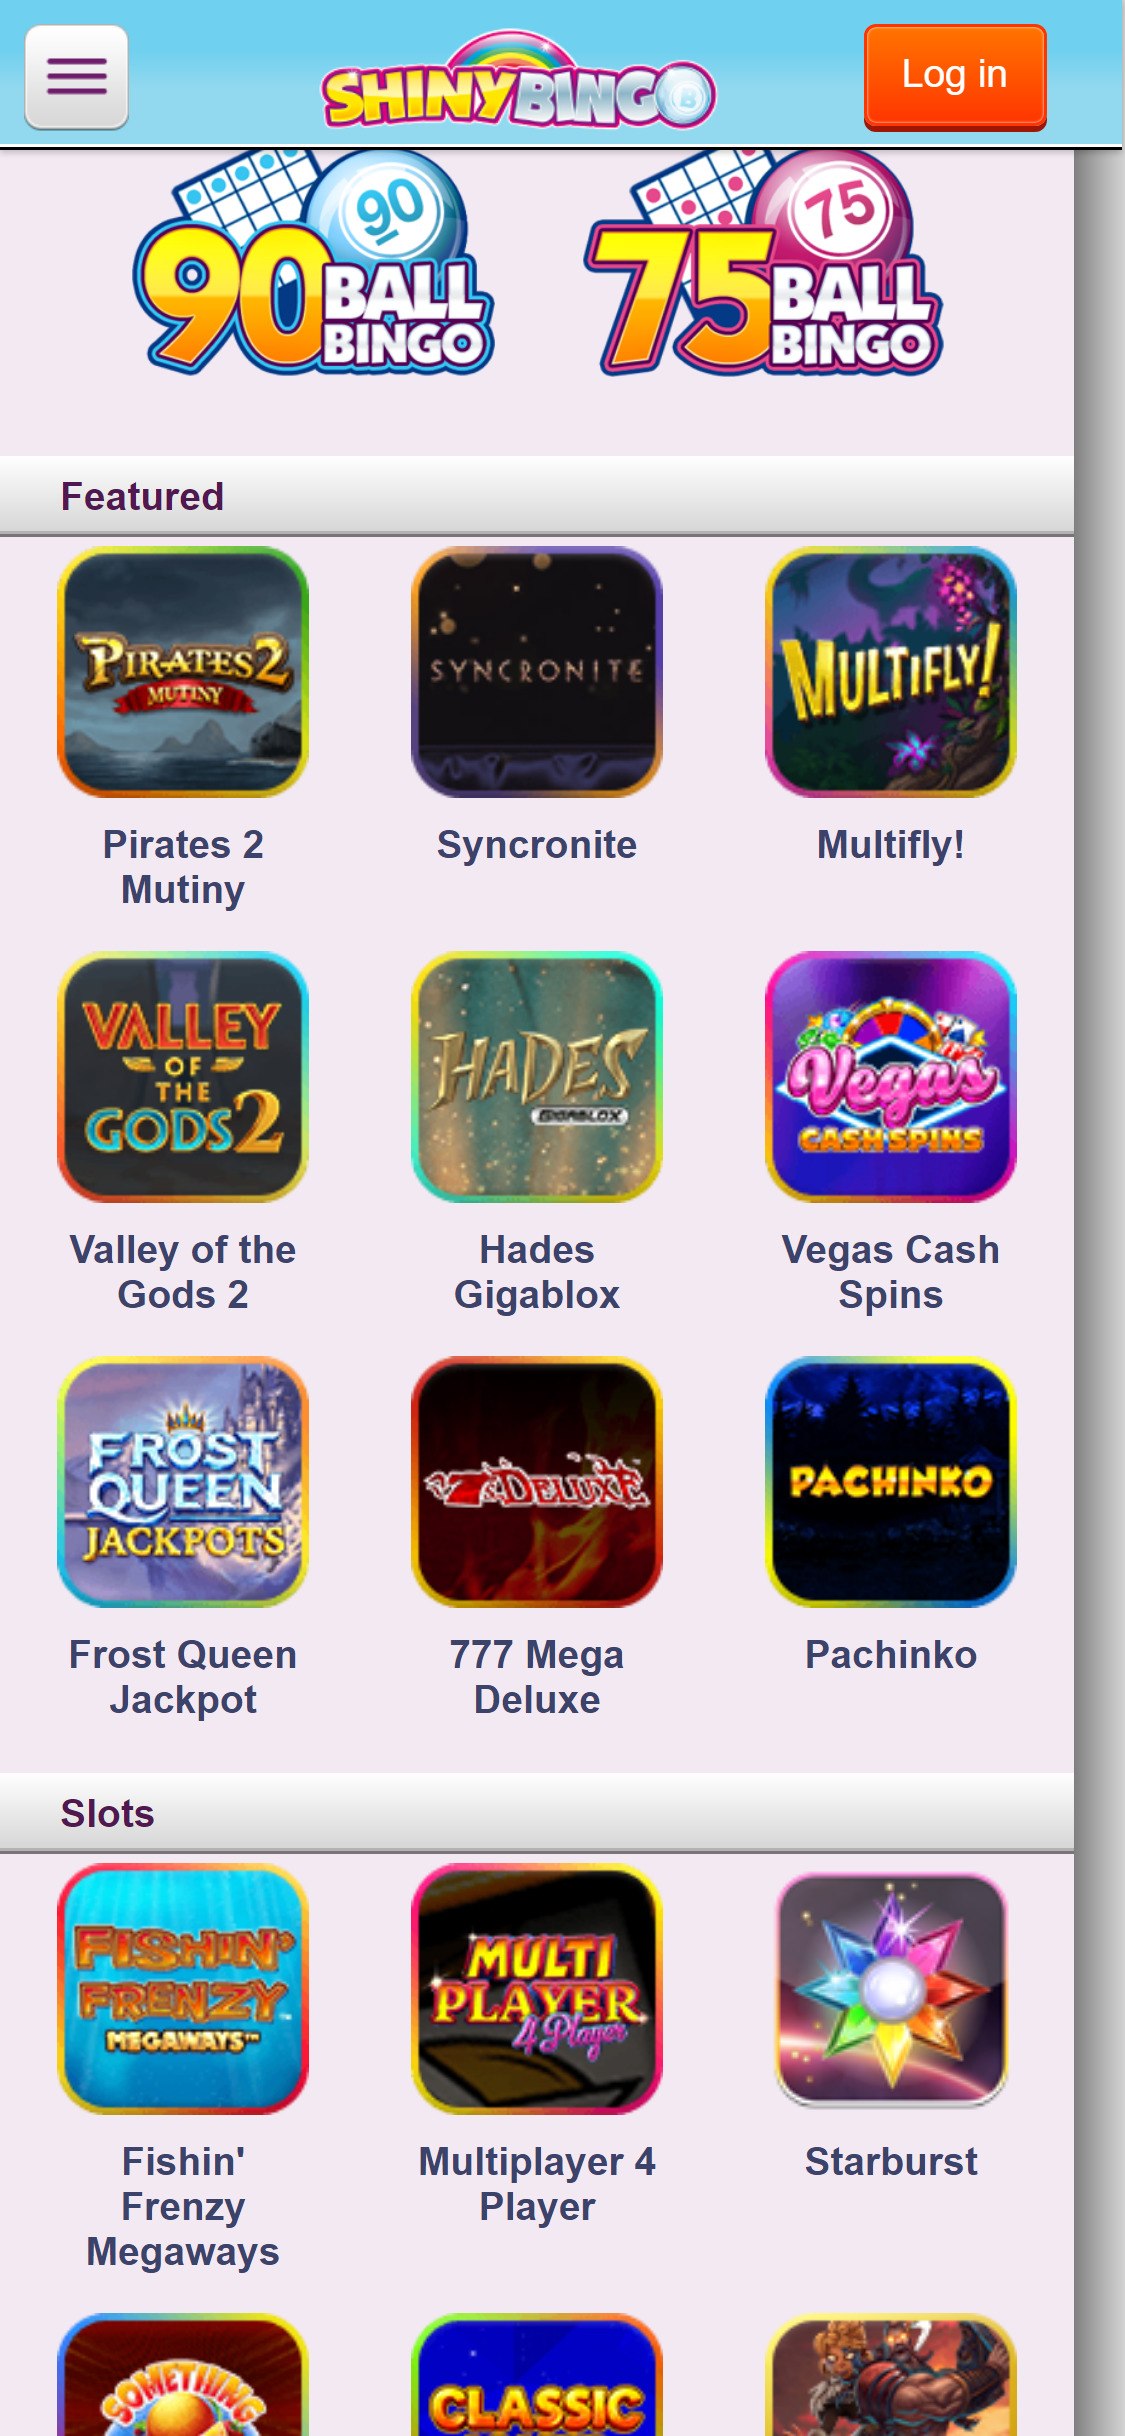 Shiny Bingo Casino Mobile Games Review